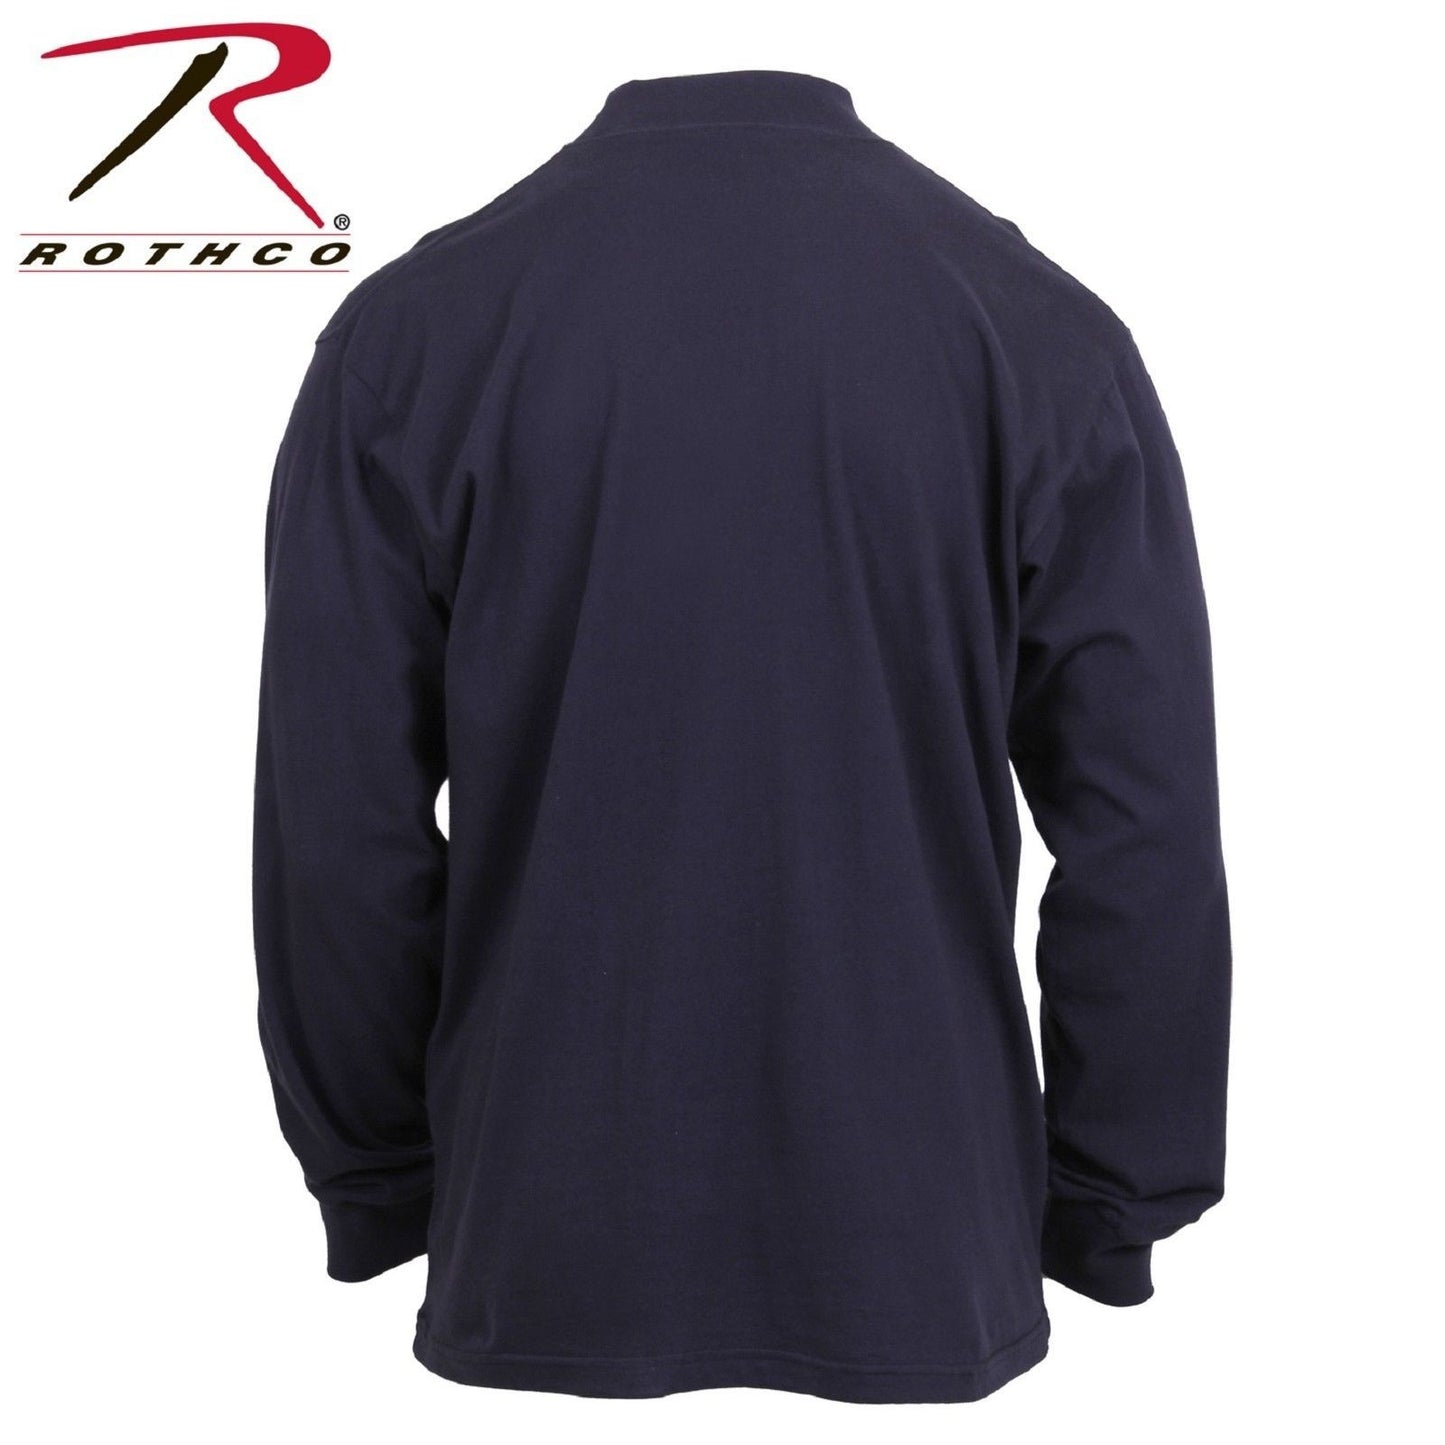 Midnight Blue Mock Turtleneck - Mens Cotton Longsleeve Shirt